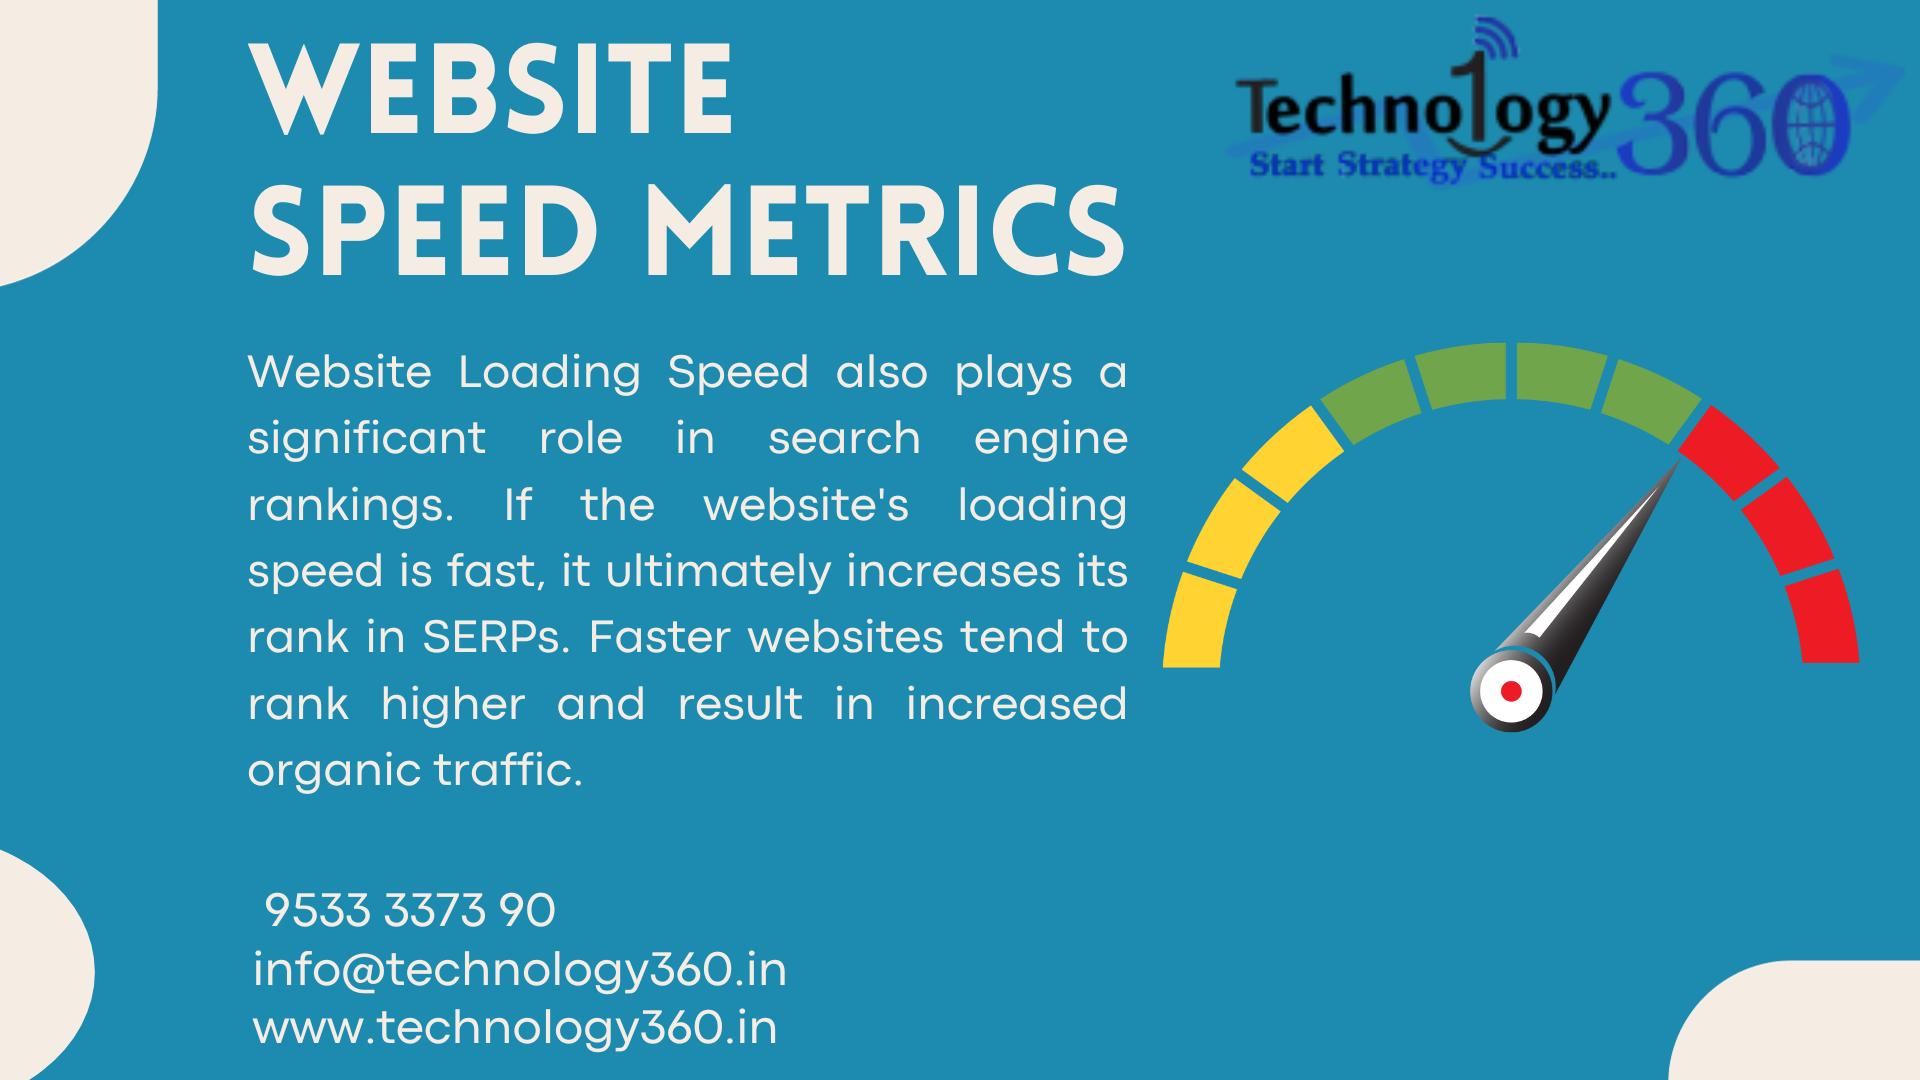 Website speed Optimization